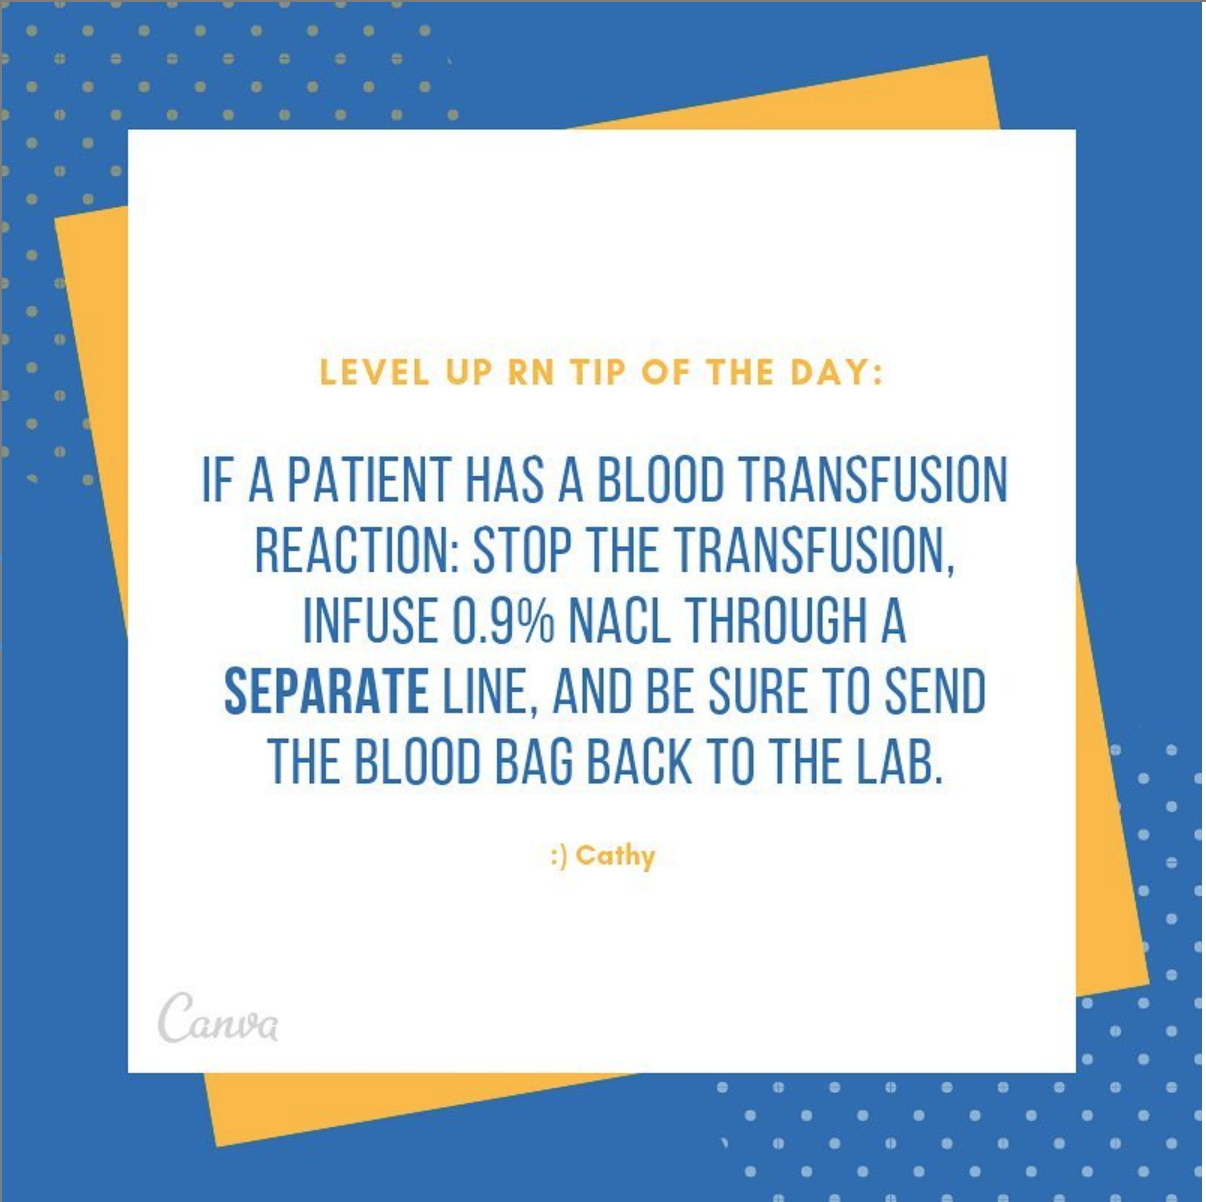 Blood transfusion reaction